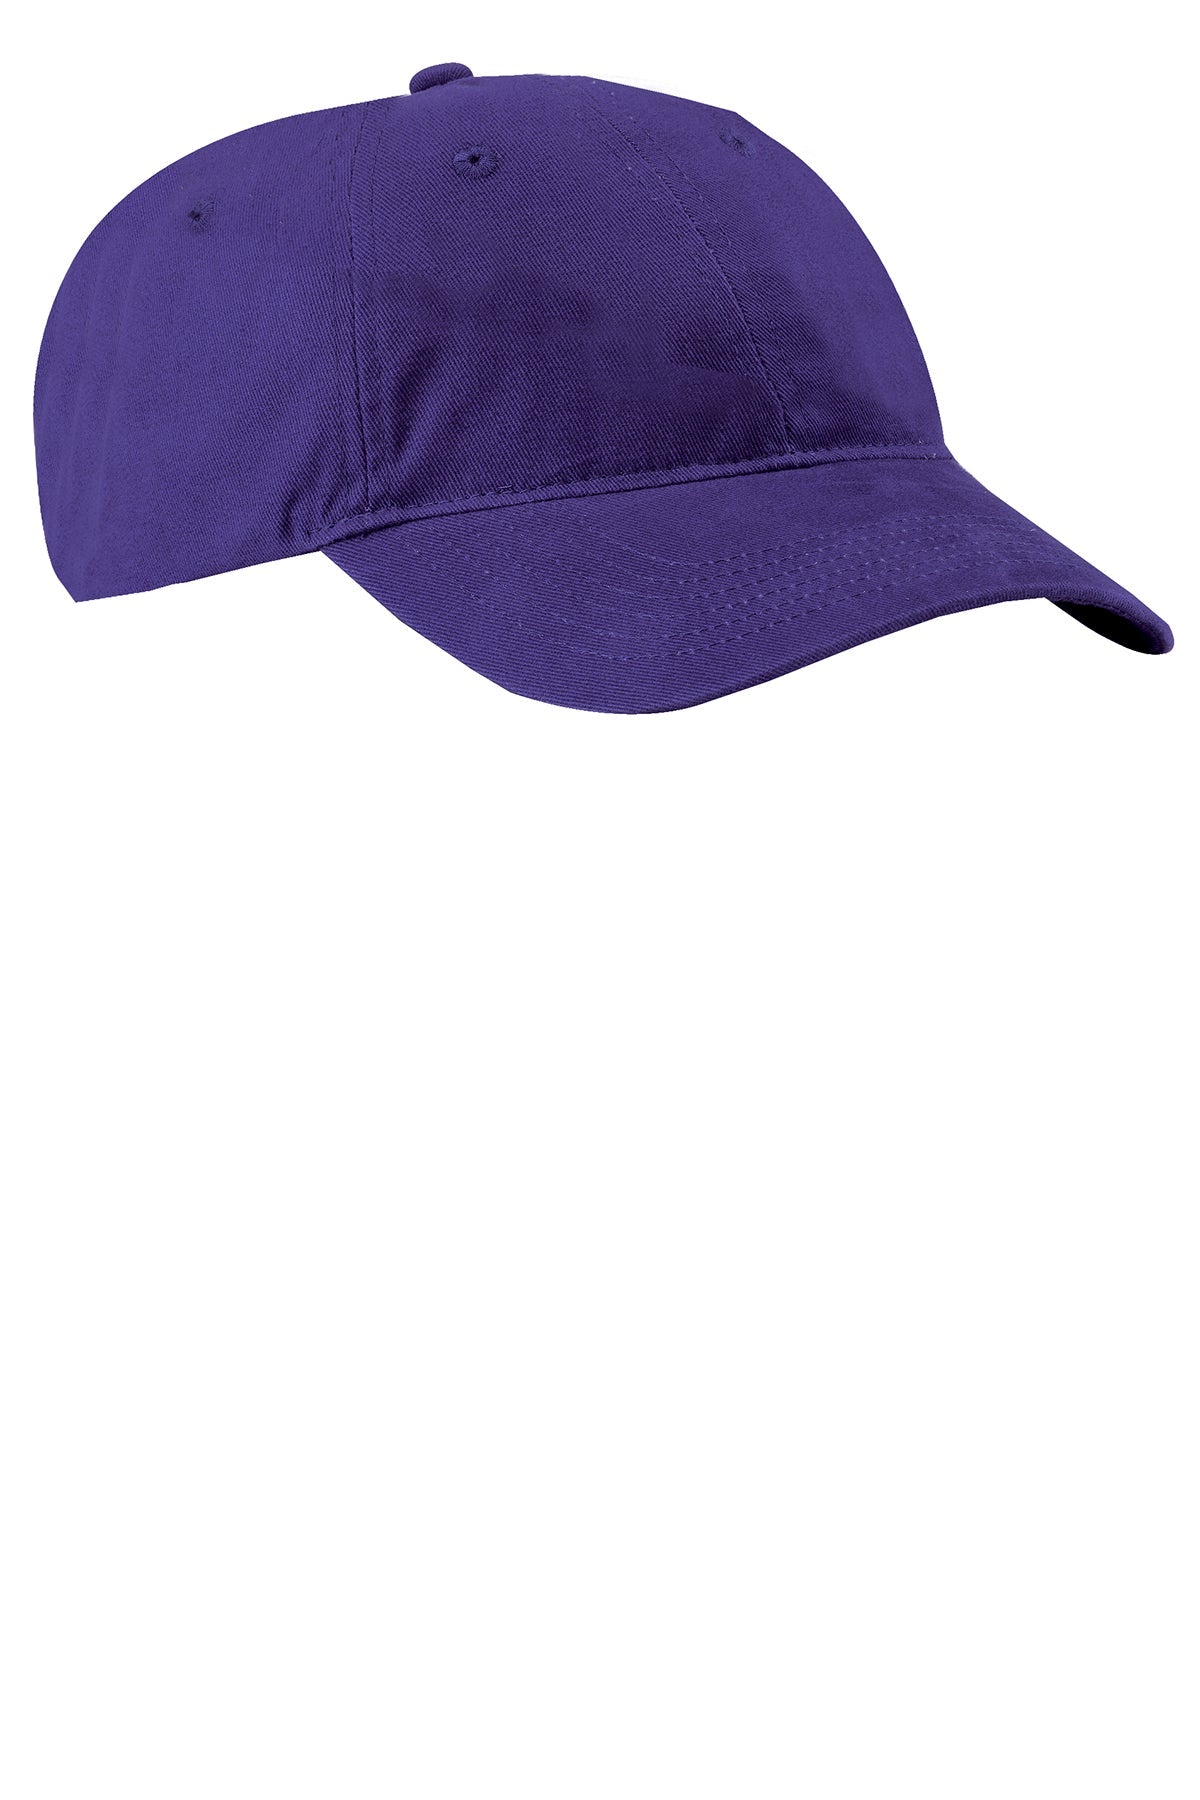 Port & Company Brushed Twill Custom Caps, Purple